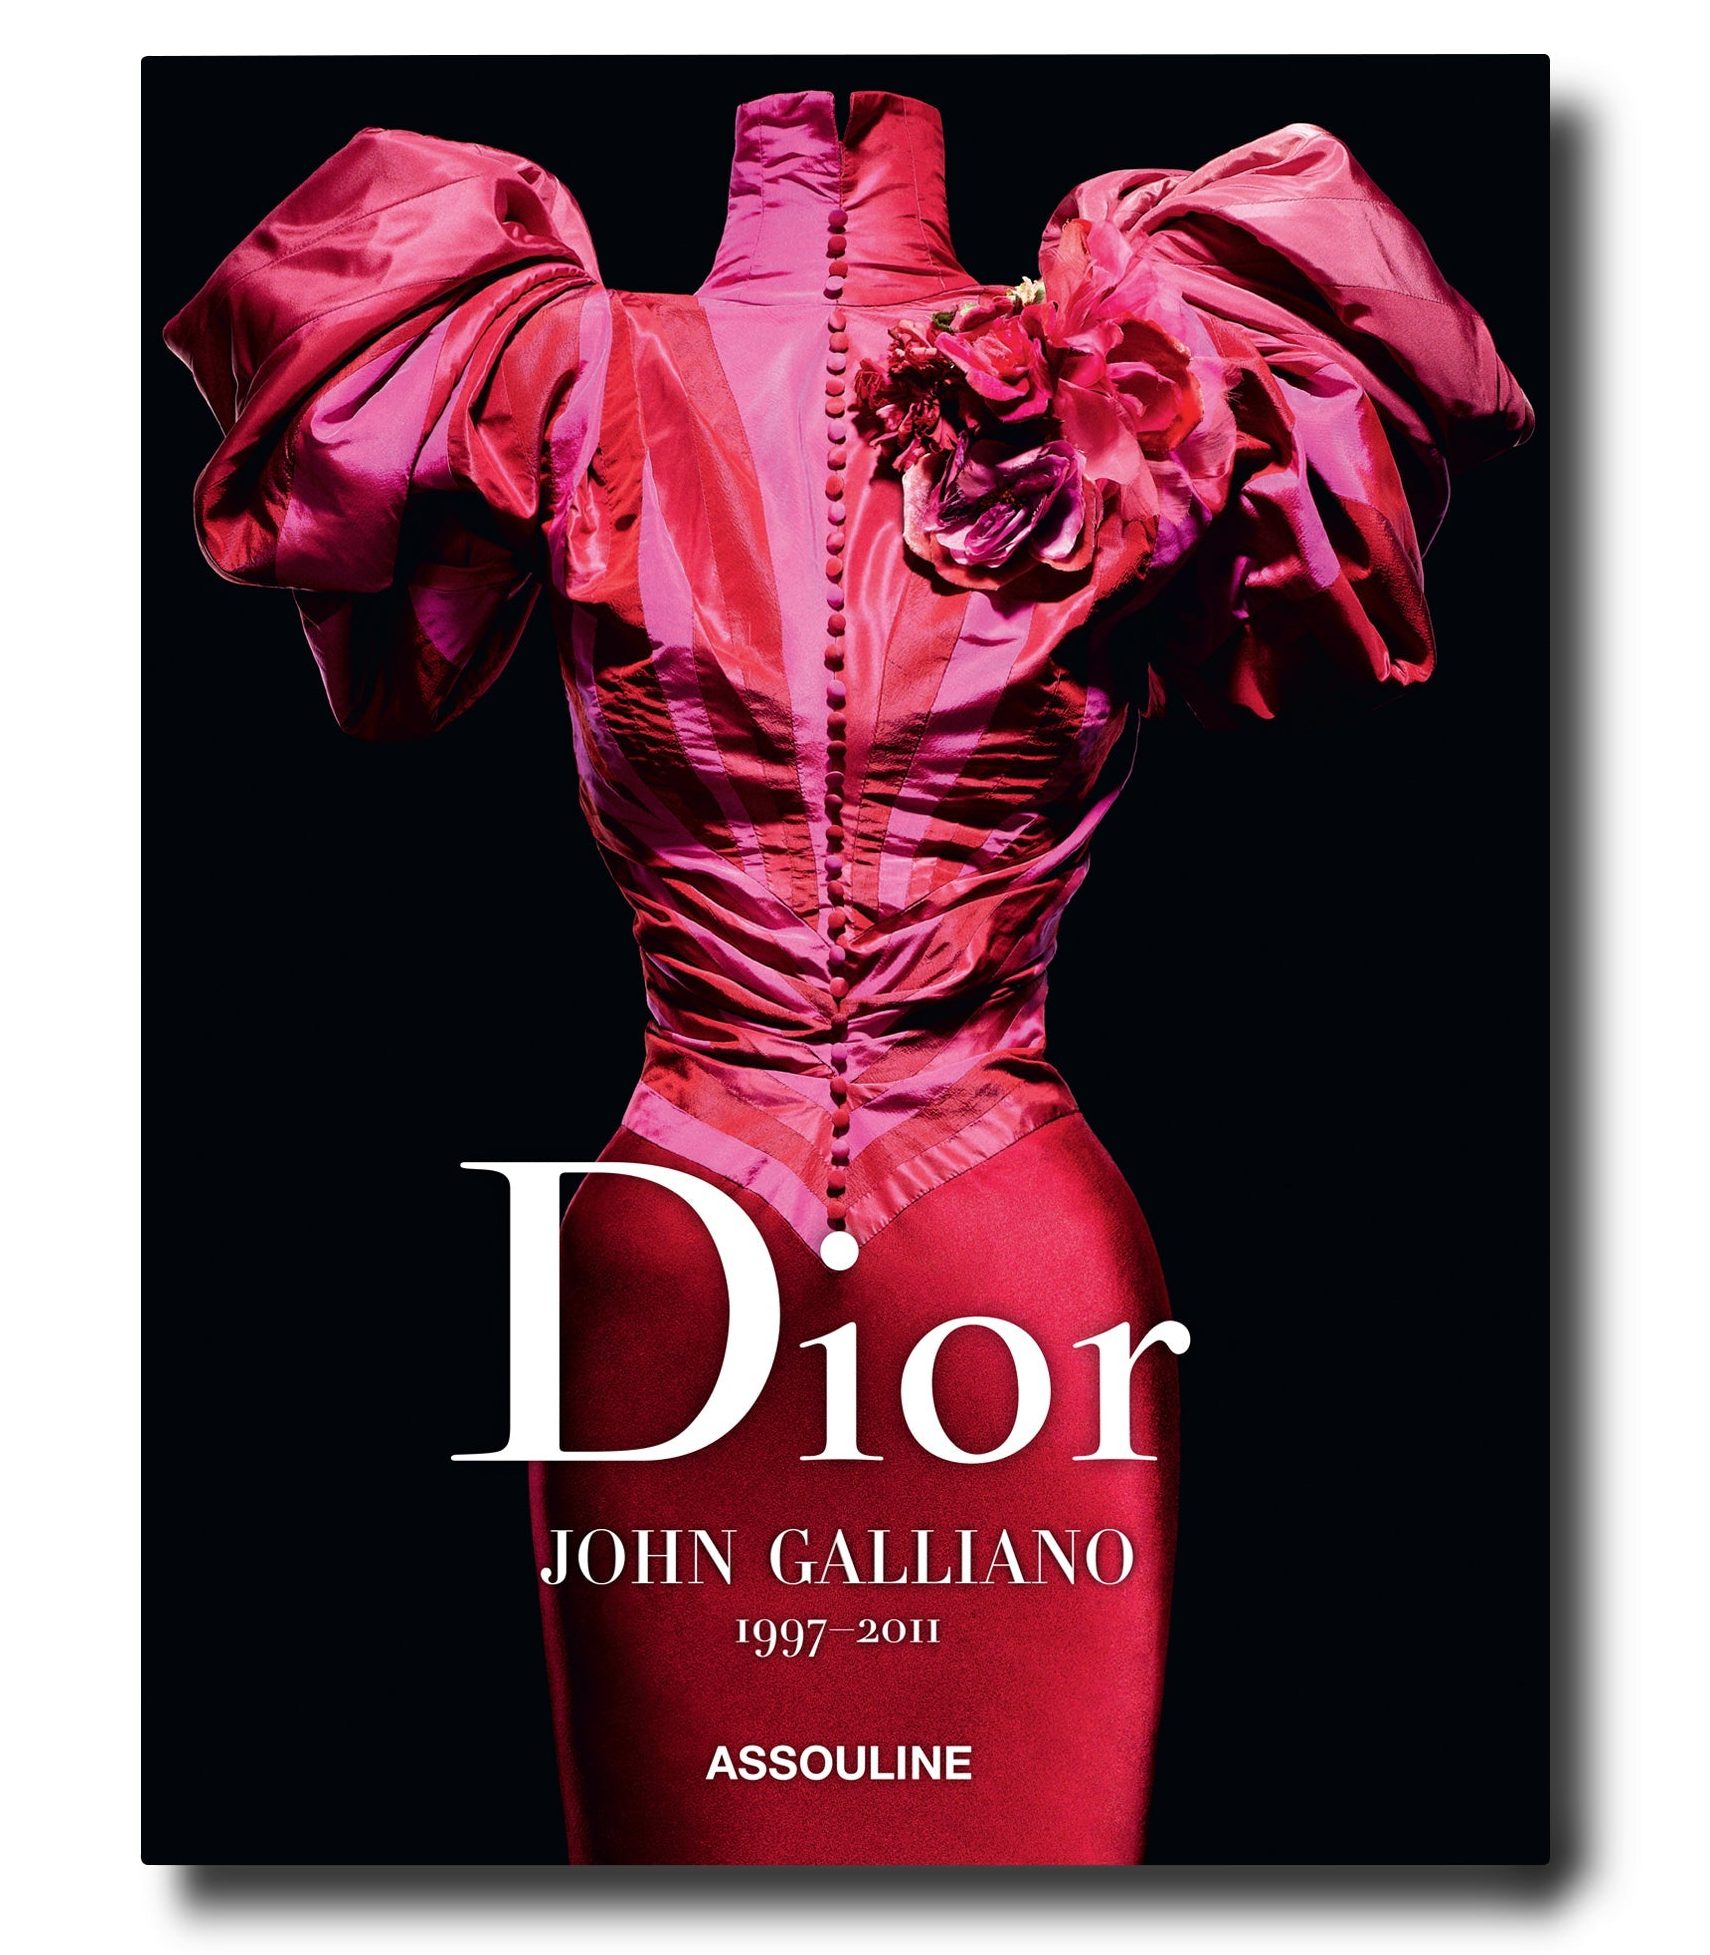 ‘Dior John Galliano 1997-2011’